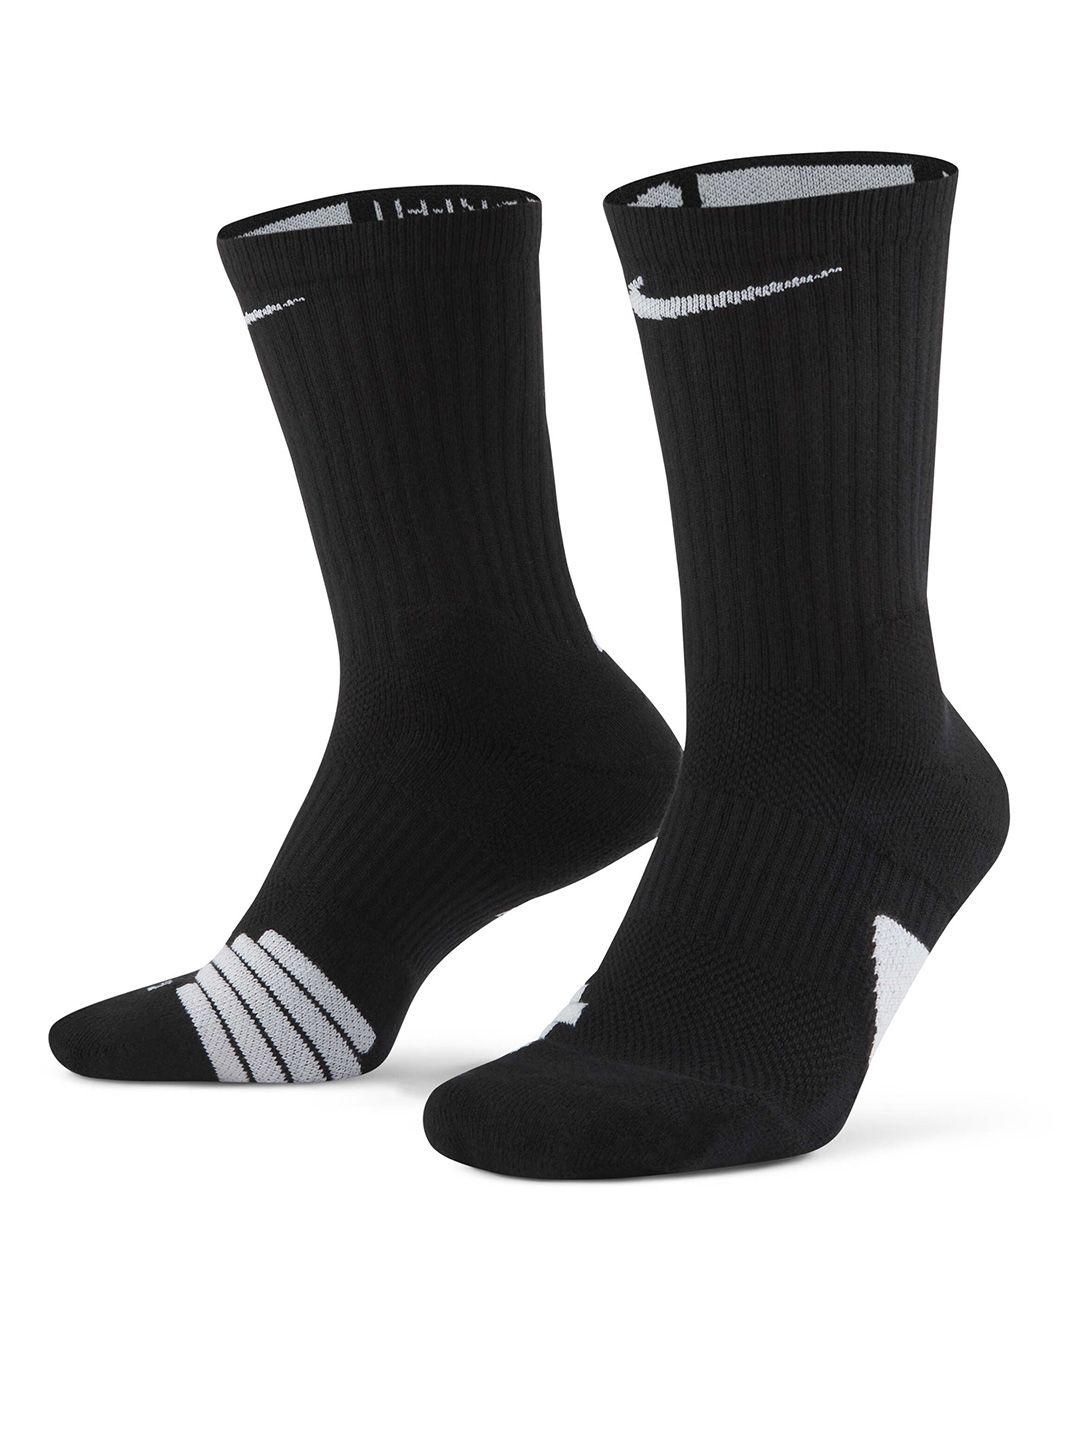 nike-men-elite-crew-cotton-basketball-socks